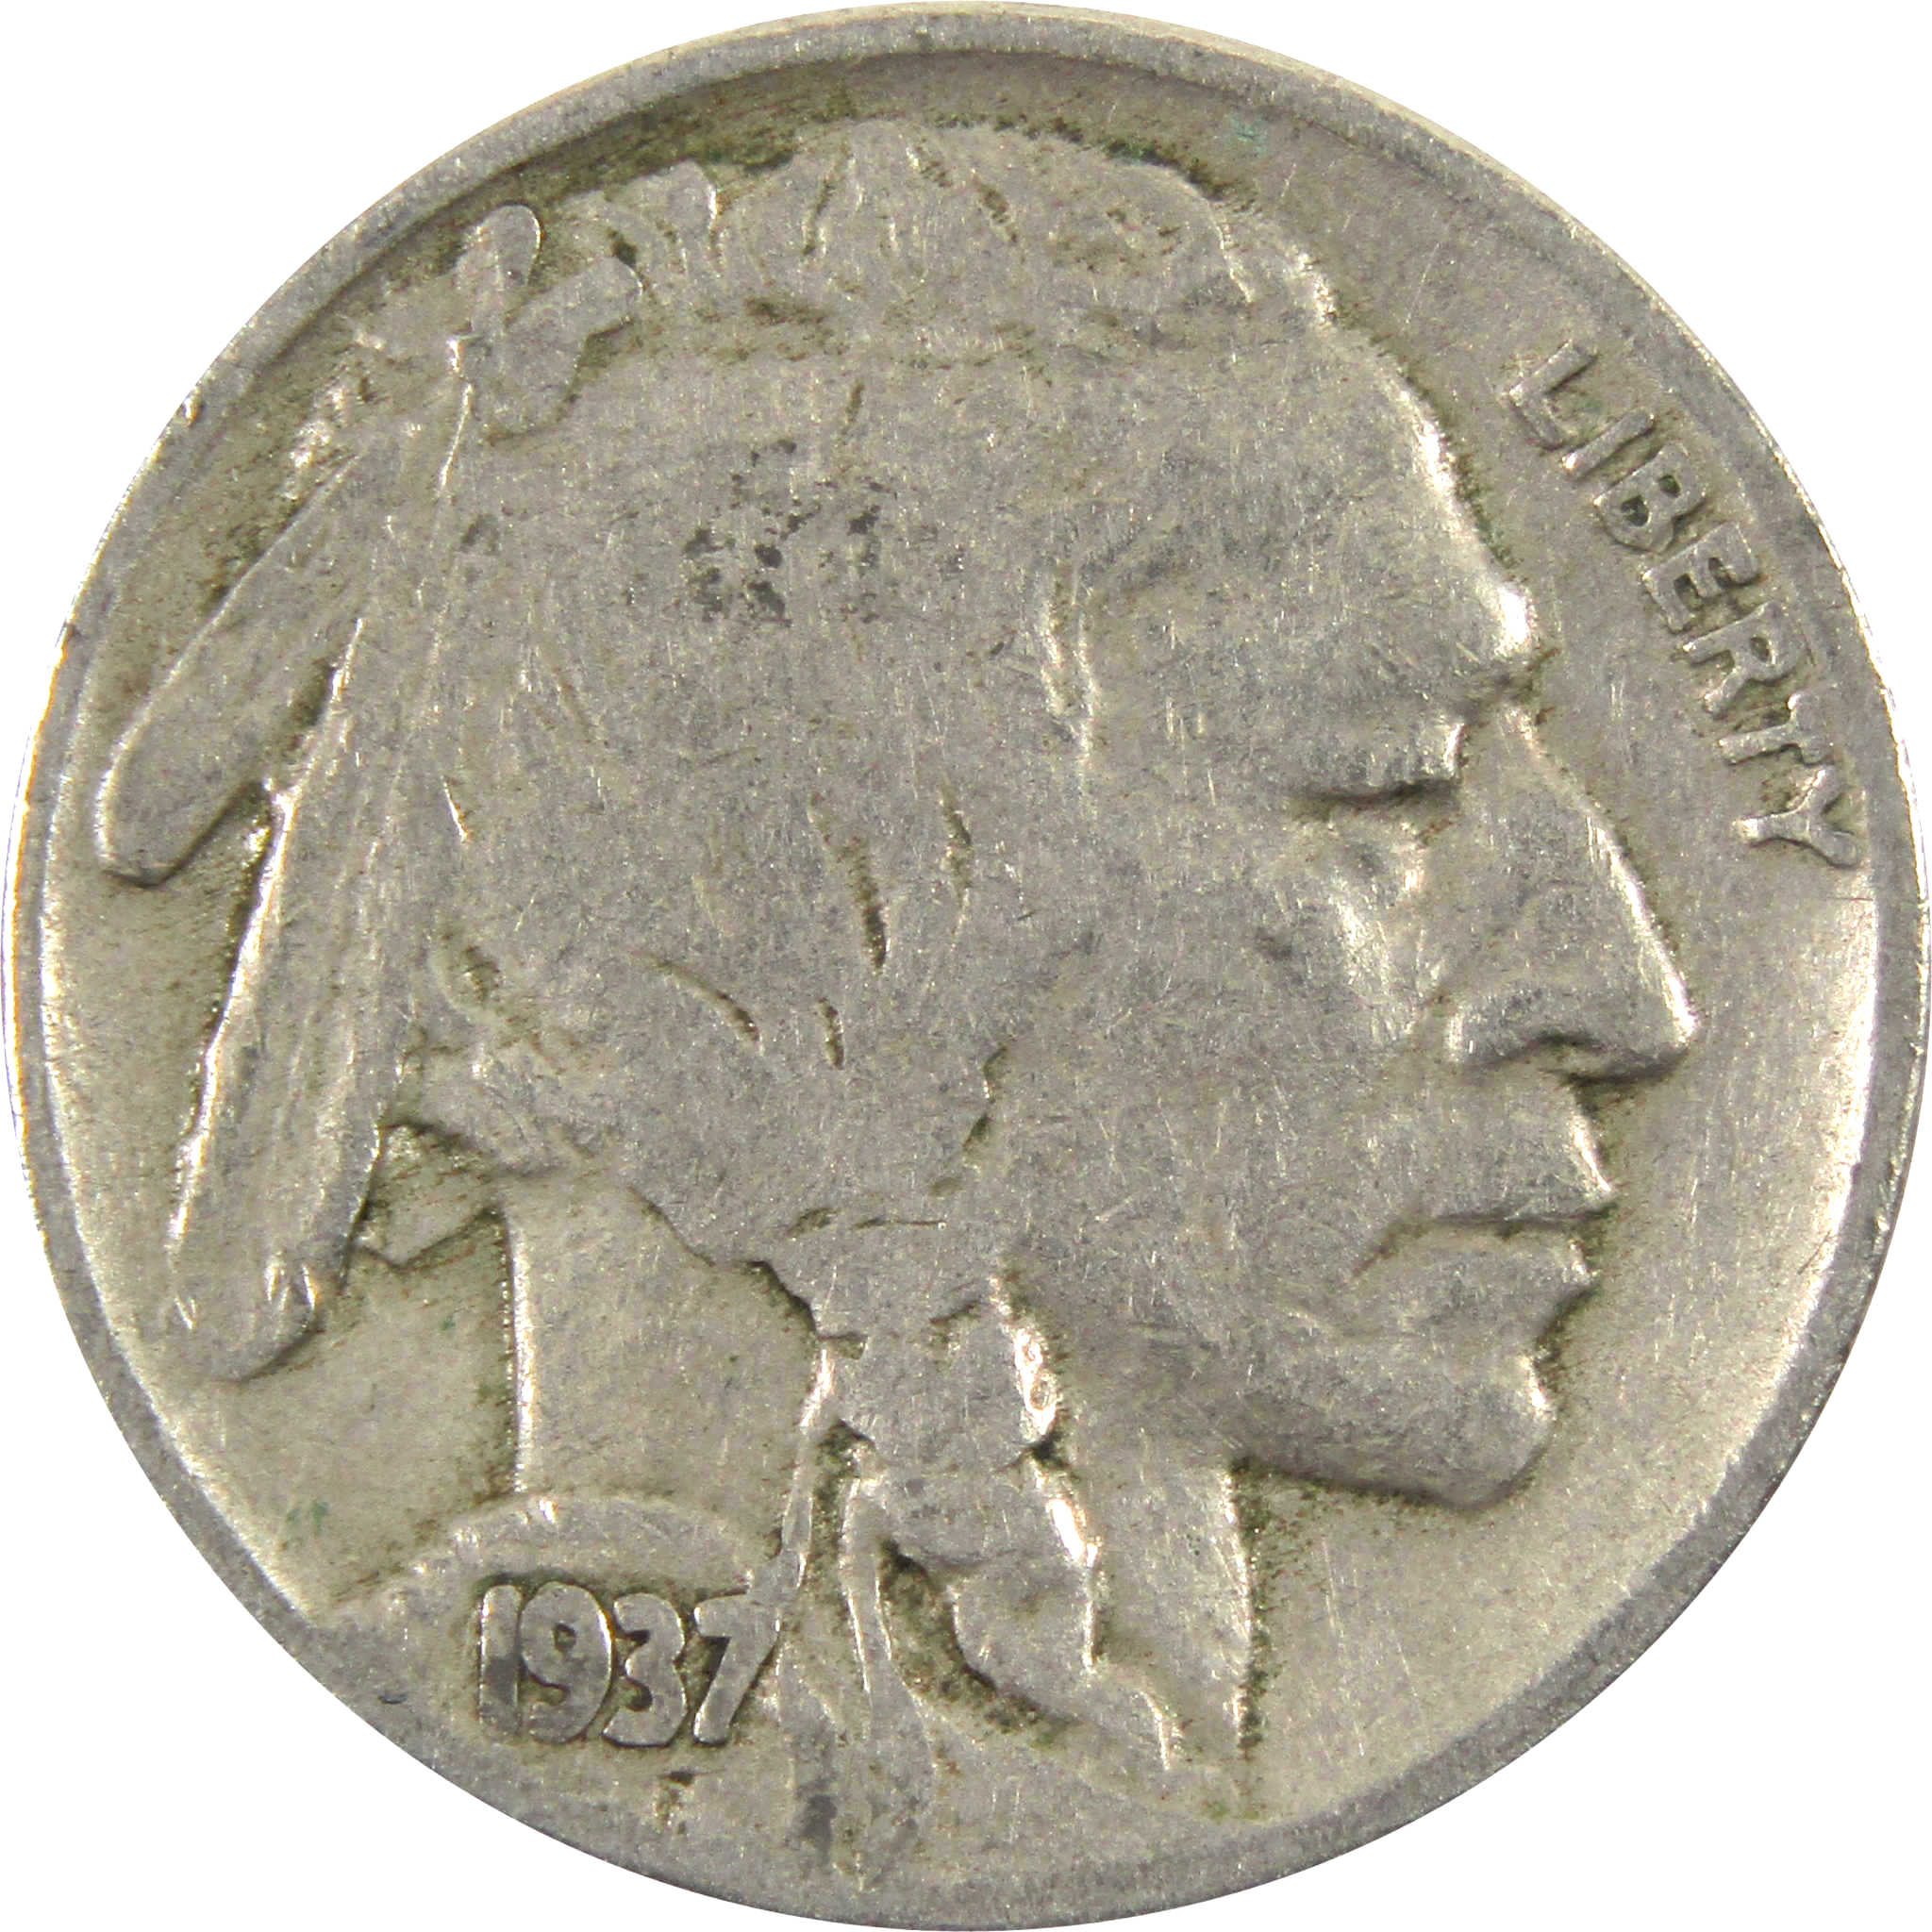 1937 Indian Head Buffalo Nickel AG About Good 5c Coin